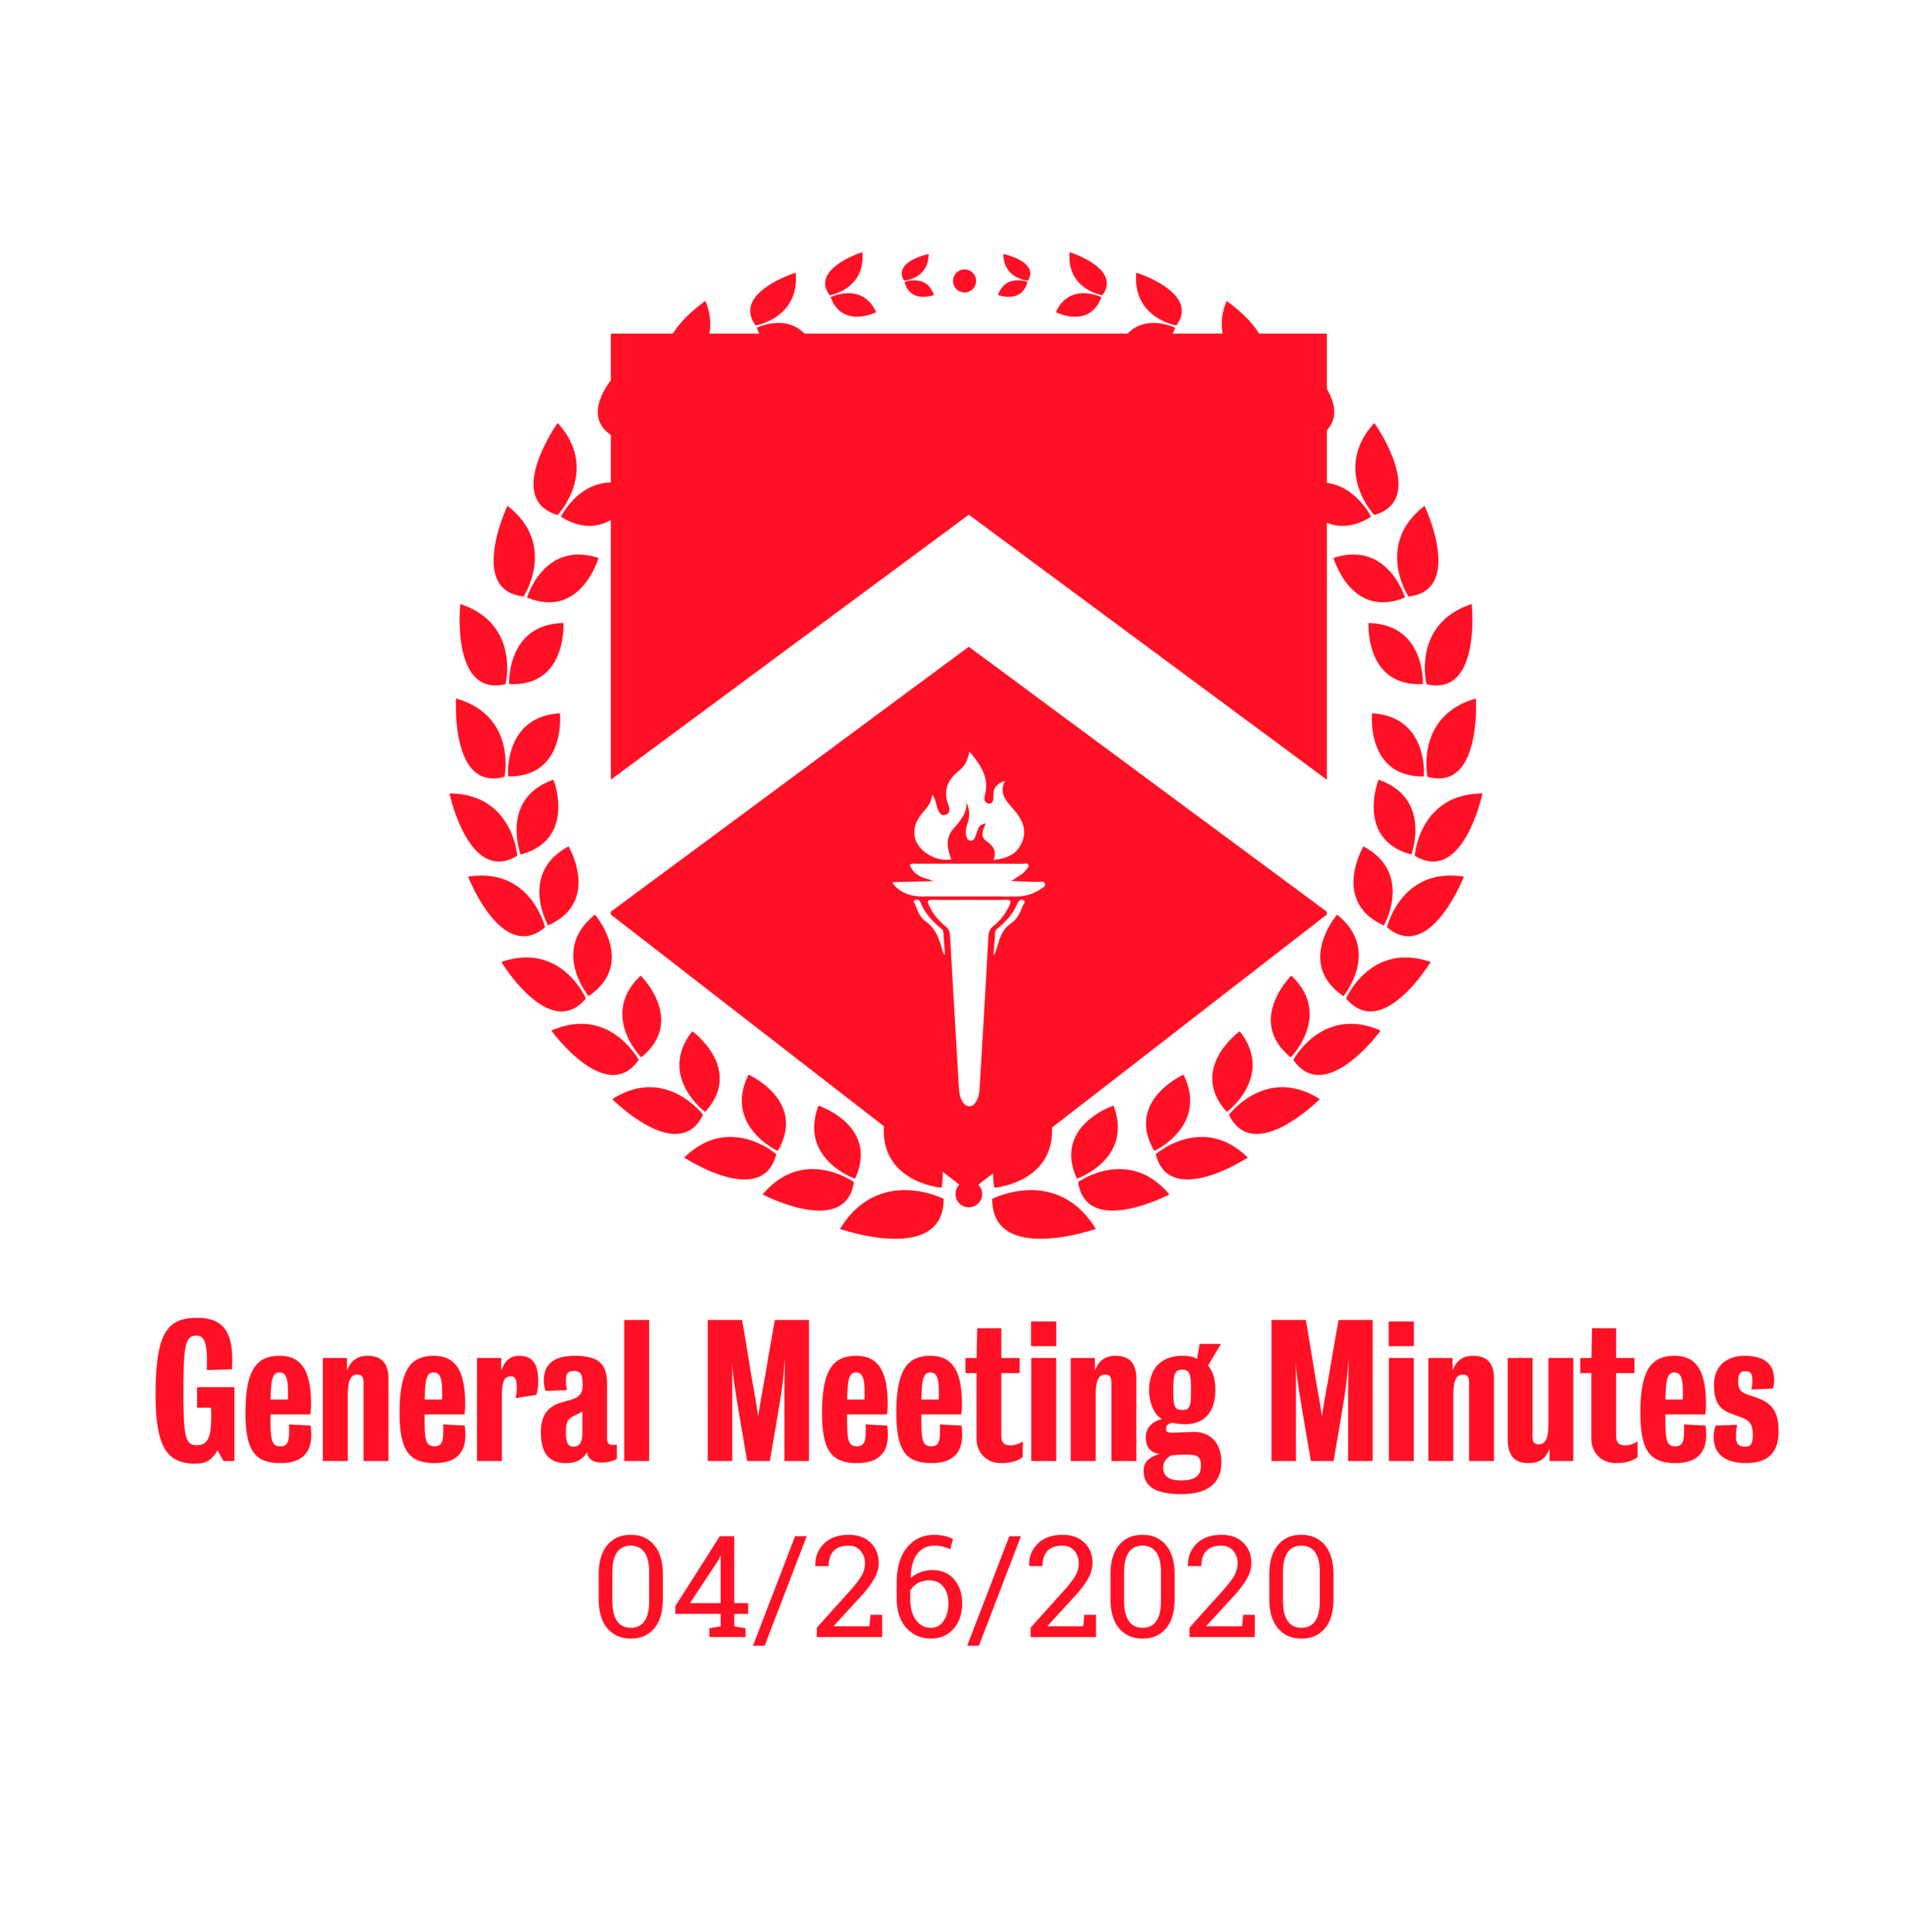 General Meeting Minutes 04/26/2020